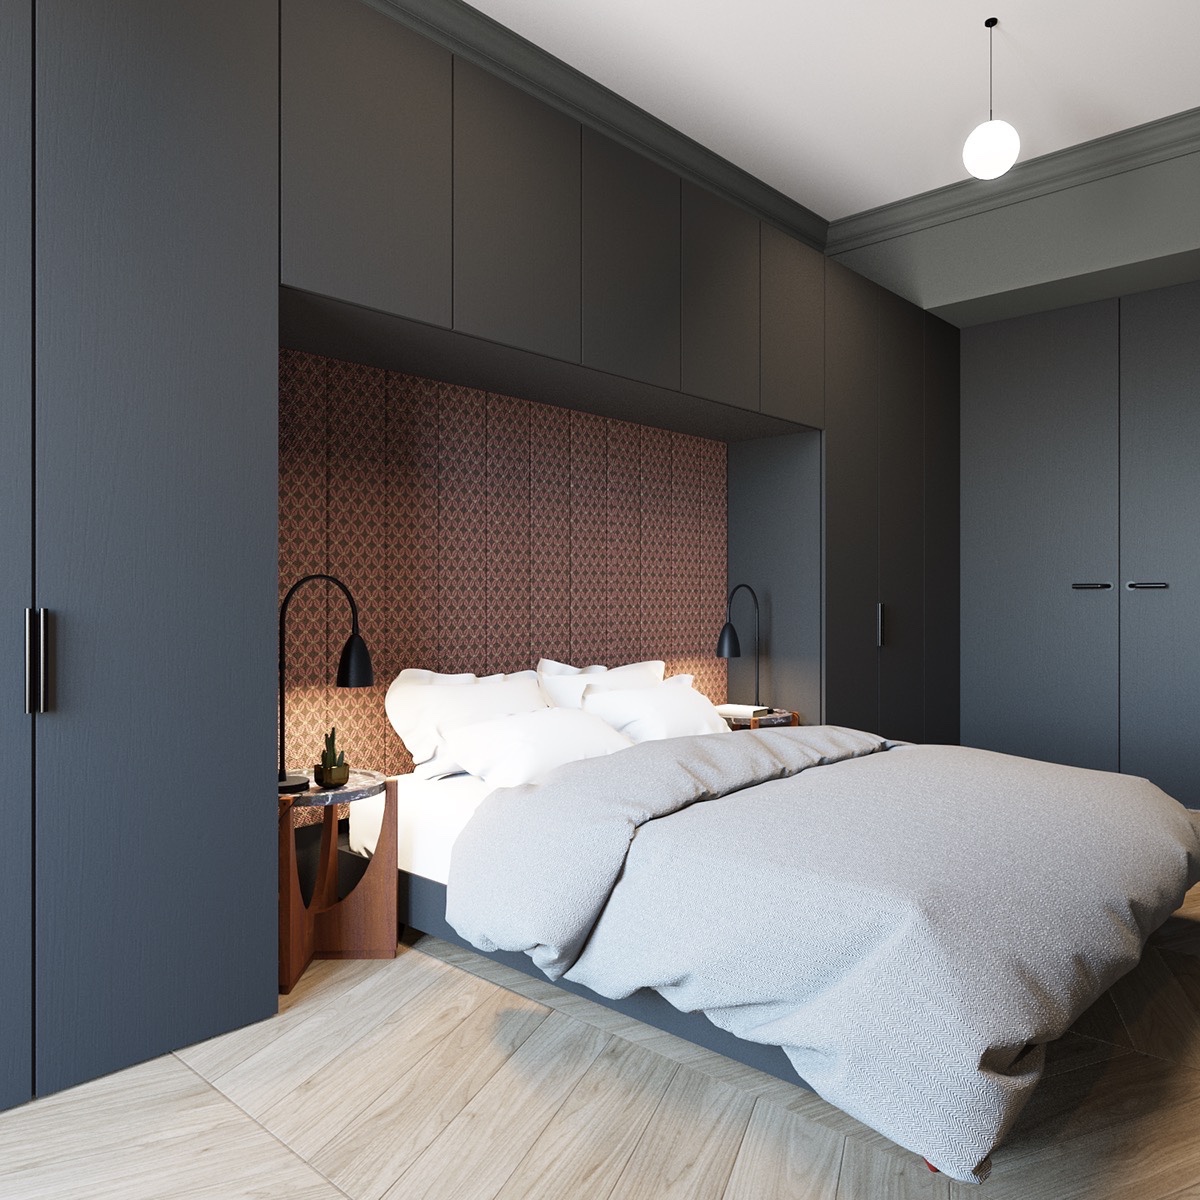 Image Result For Cozy Bedroom Design Ideas